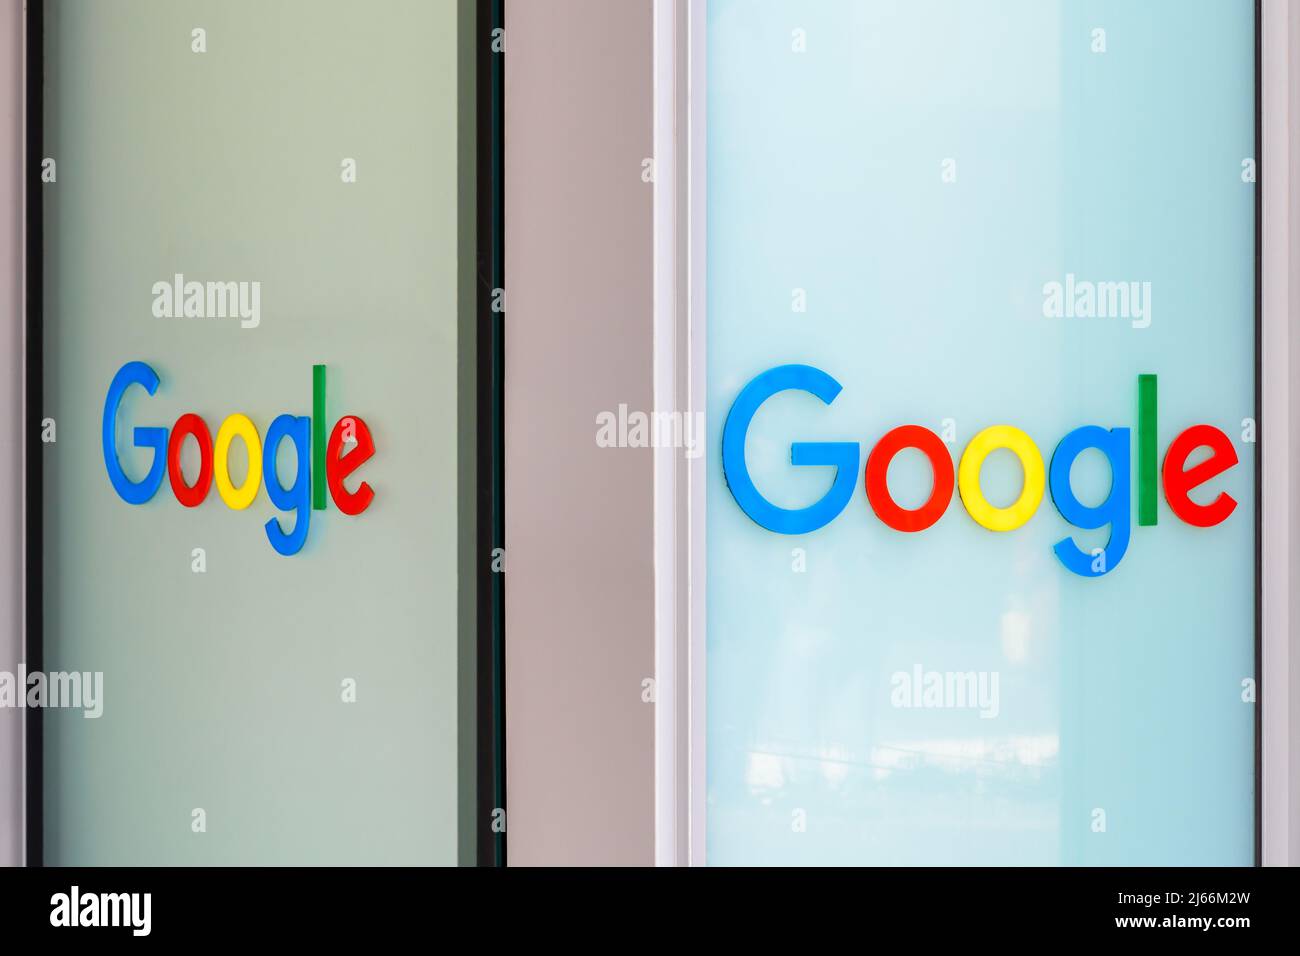 Google logos on a glass pane. Stock Photo